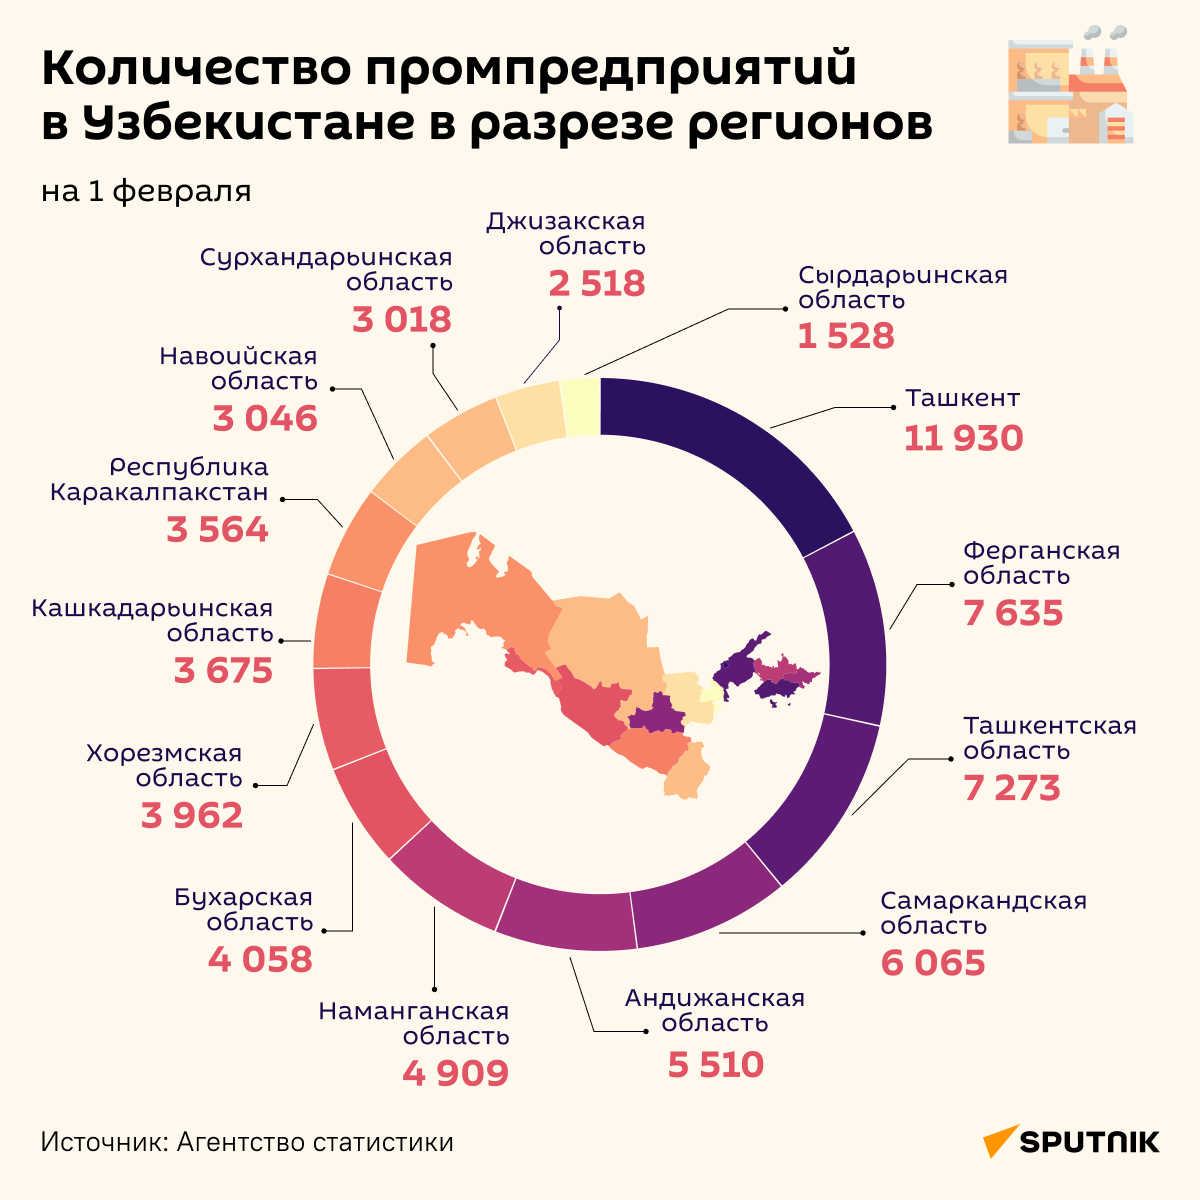 Количество промпредприятий в Узбекистане в разрезе регионов - Sputnik Узбекистан